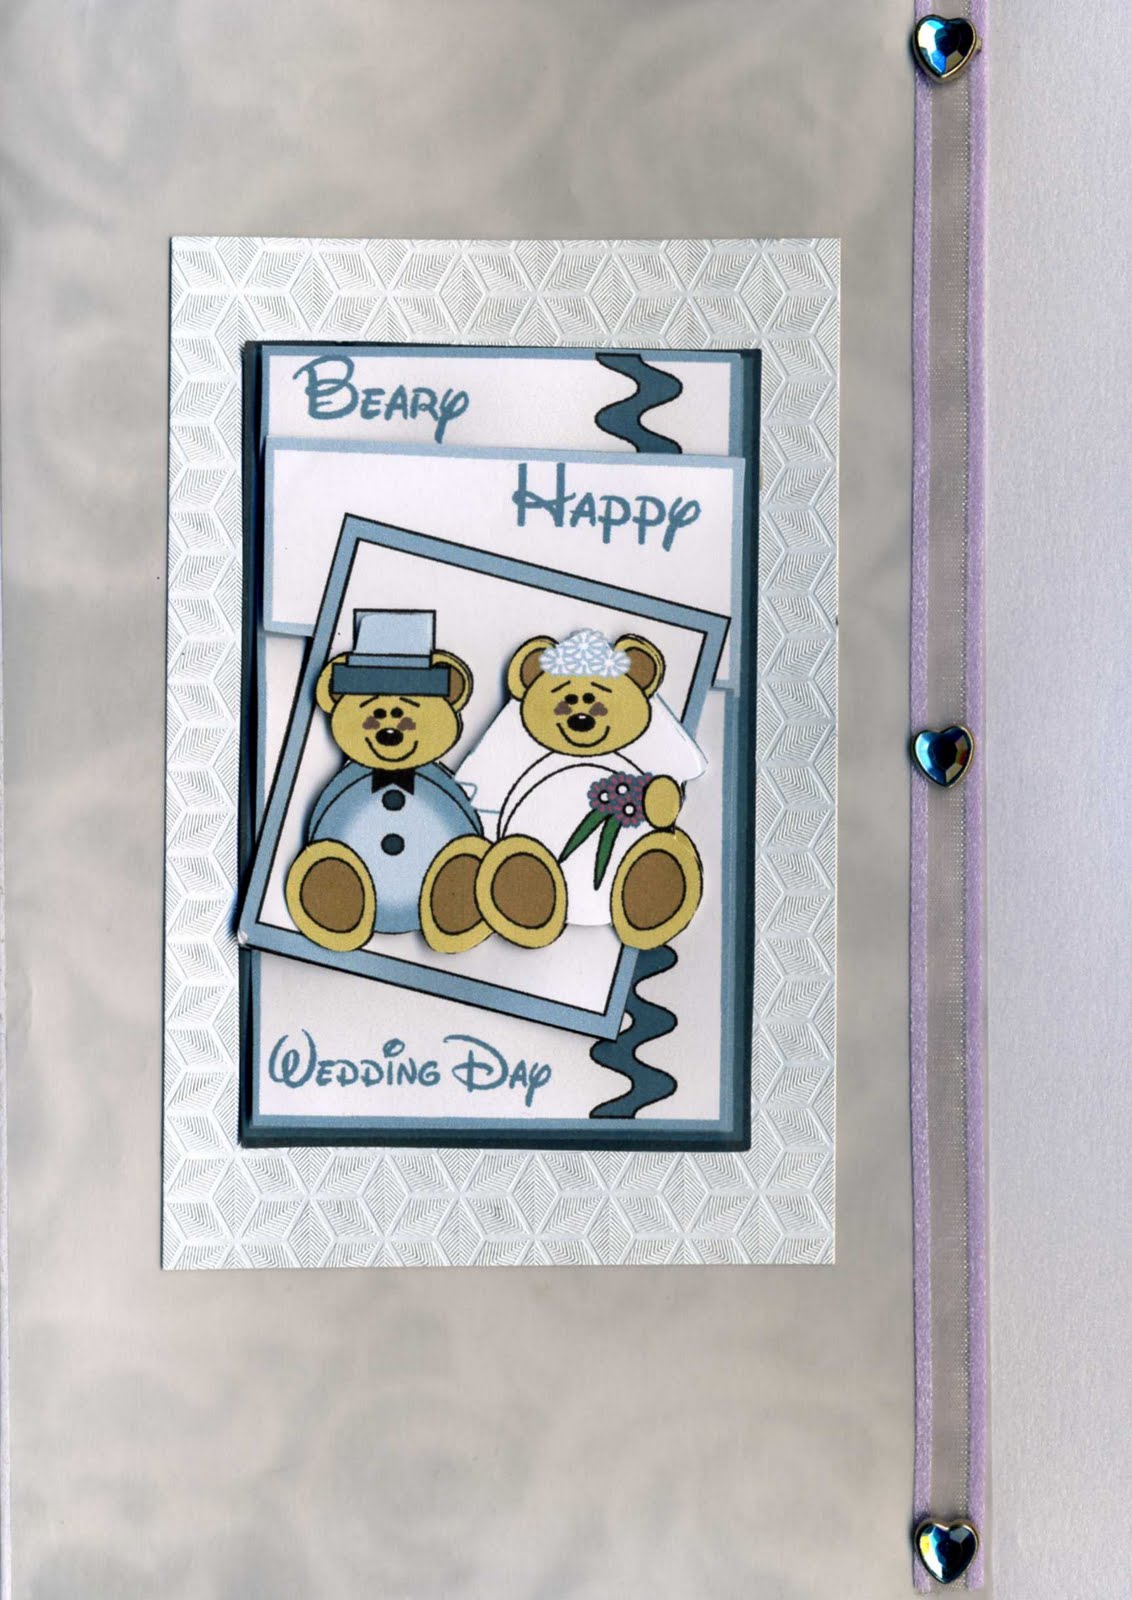 Beary Happy Wedding Day Card